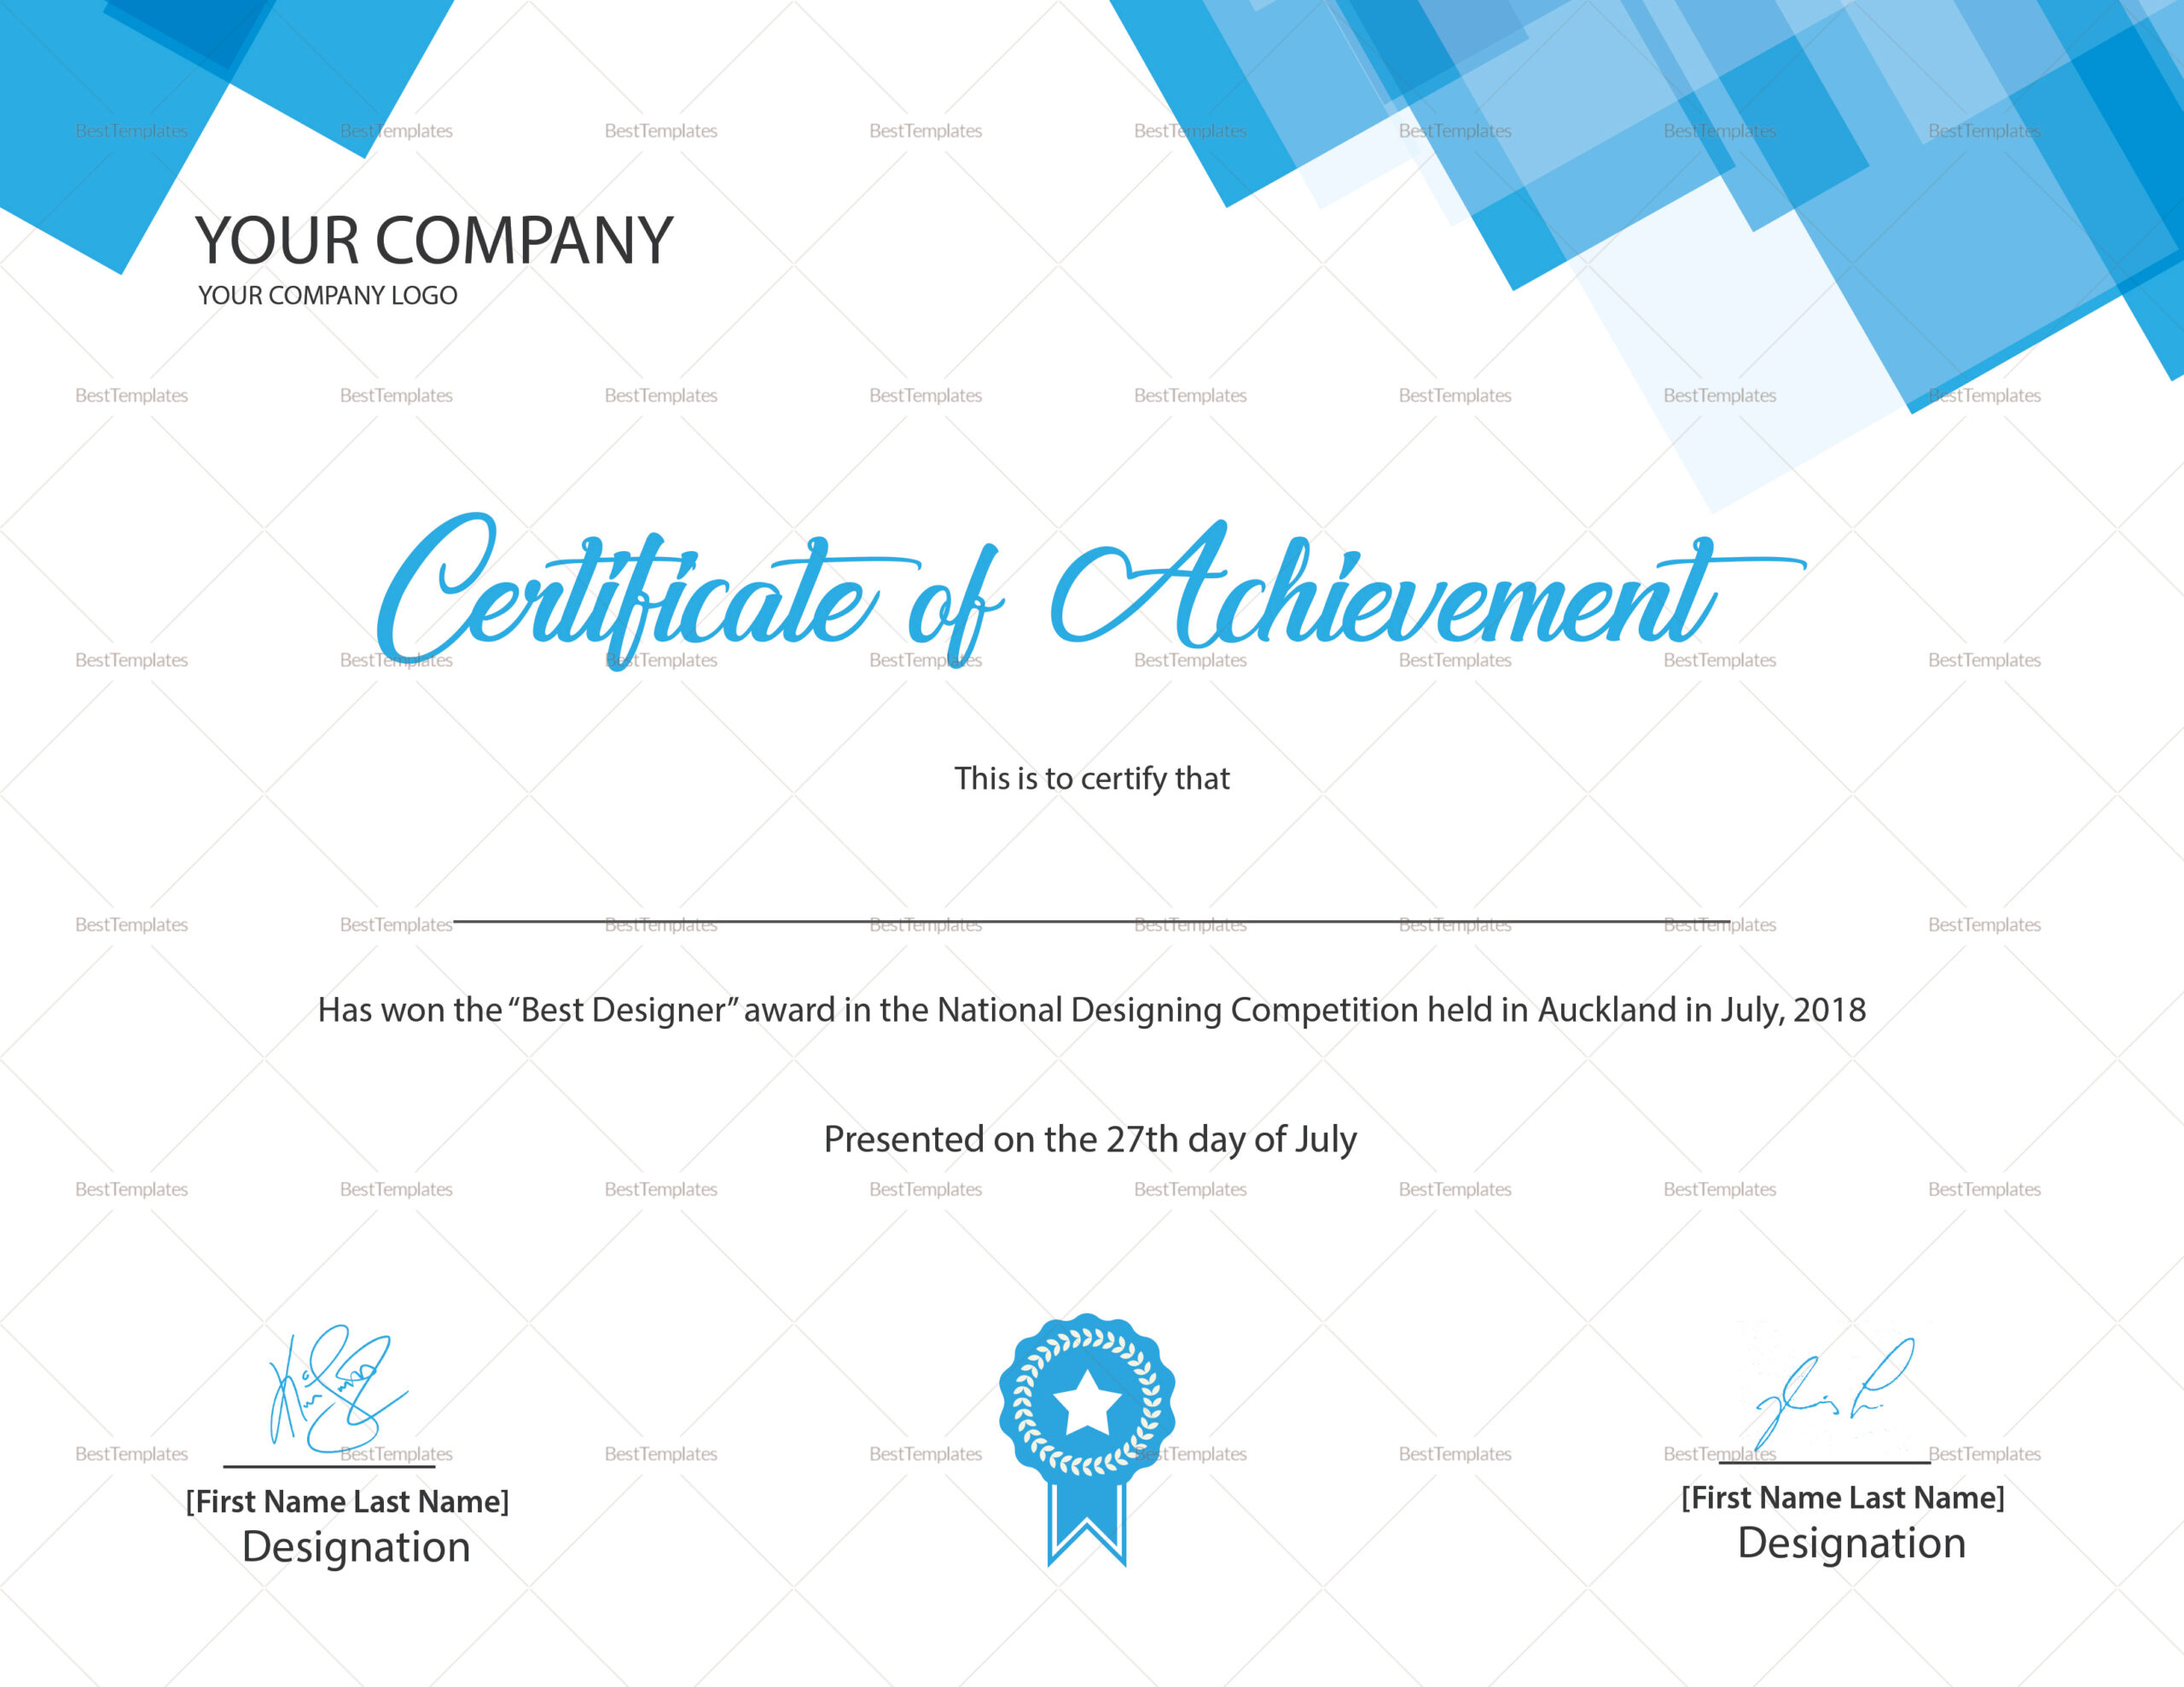 Best Designer Achievement Certificate Design Template In Psd, Word with regard to Fantastic Word Certificate Of Achievement Template